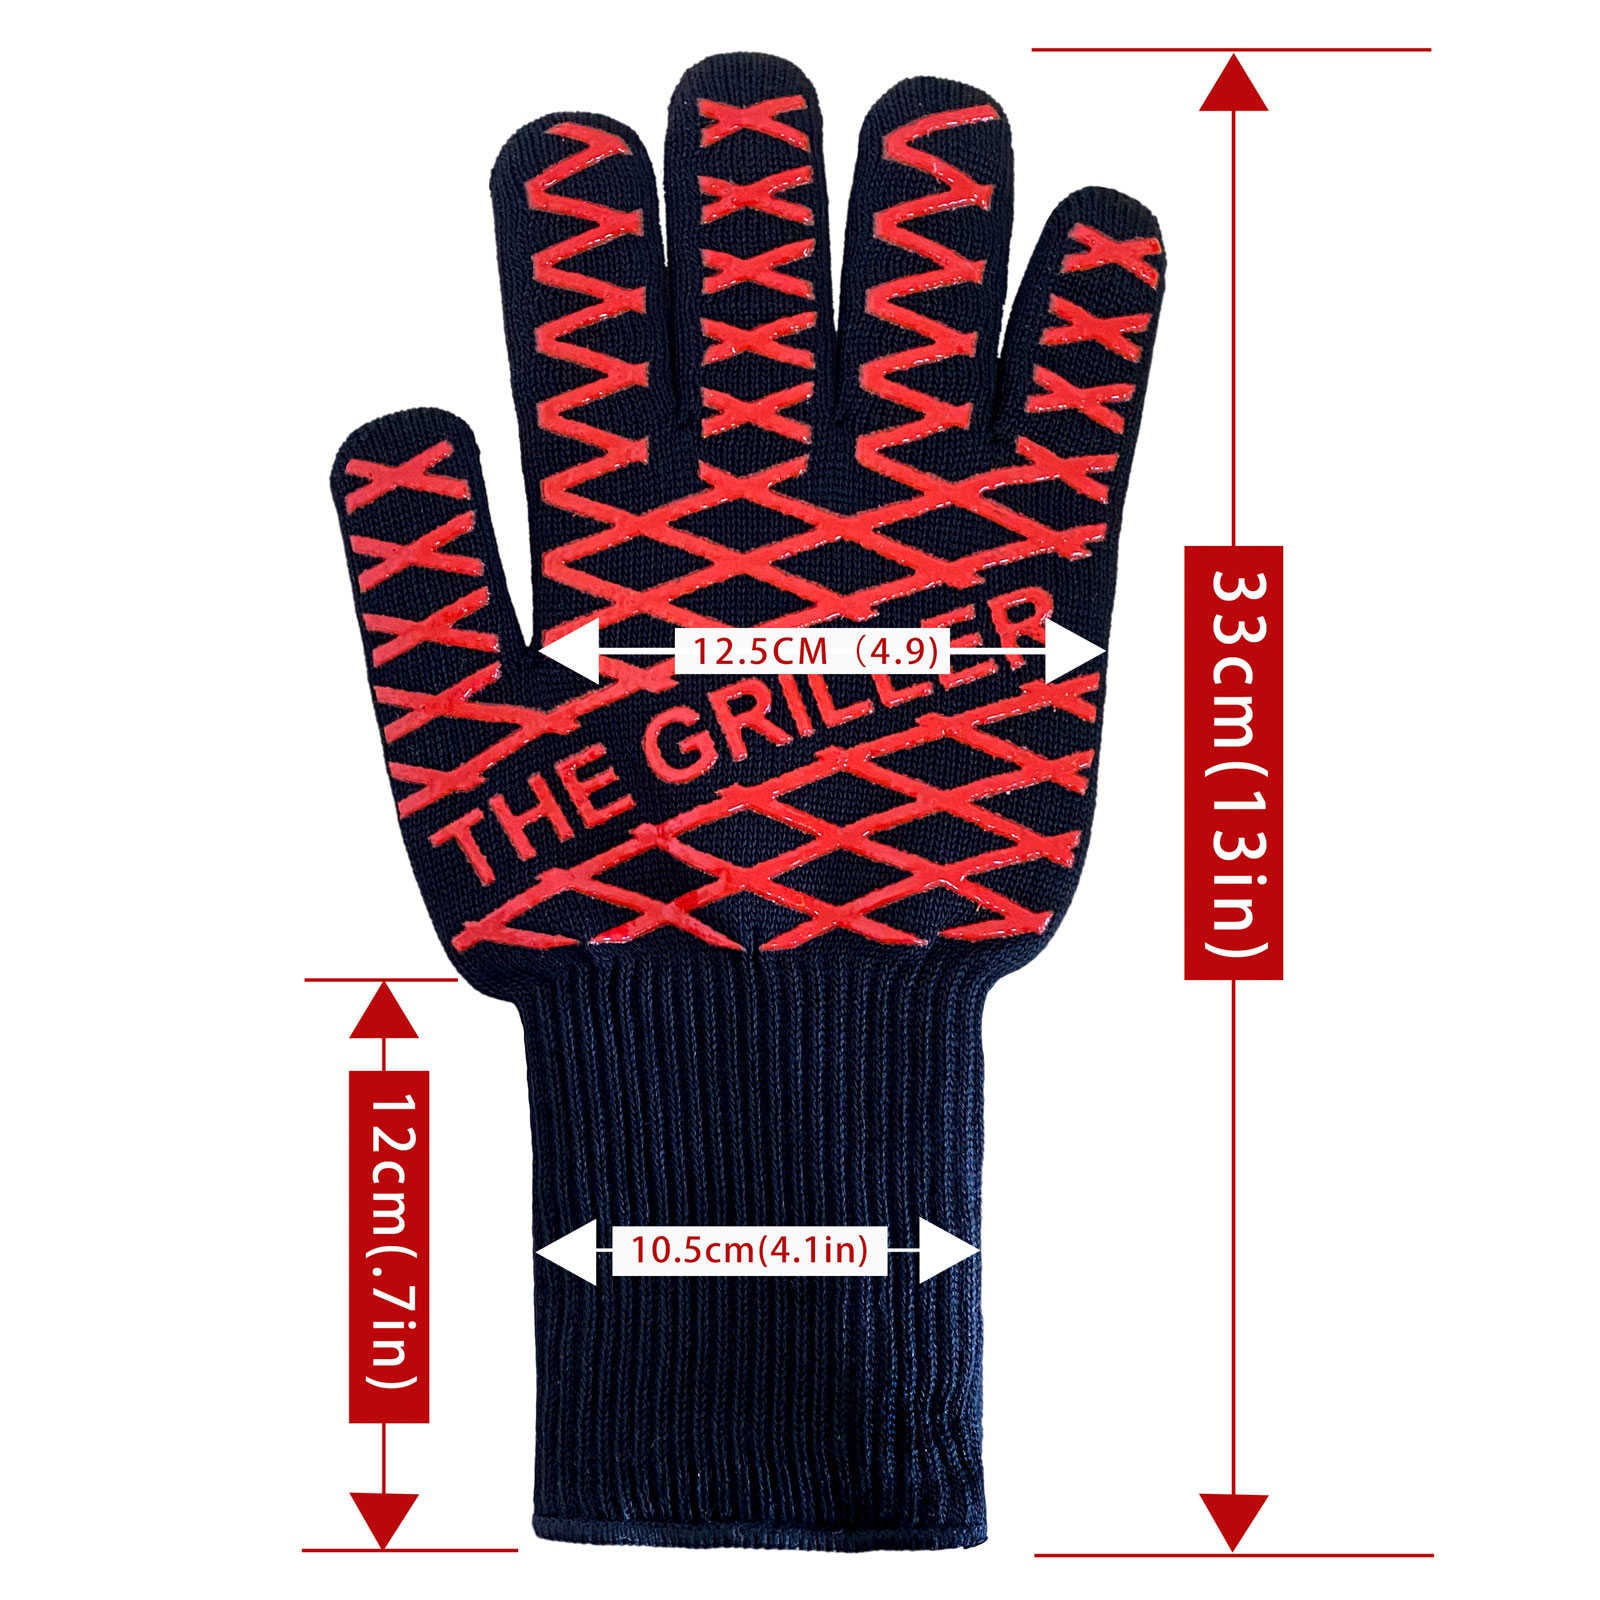 Cut Resistant Gloves - EvridWearUS